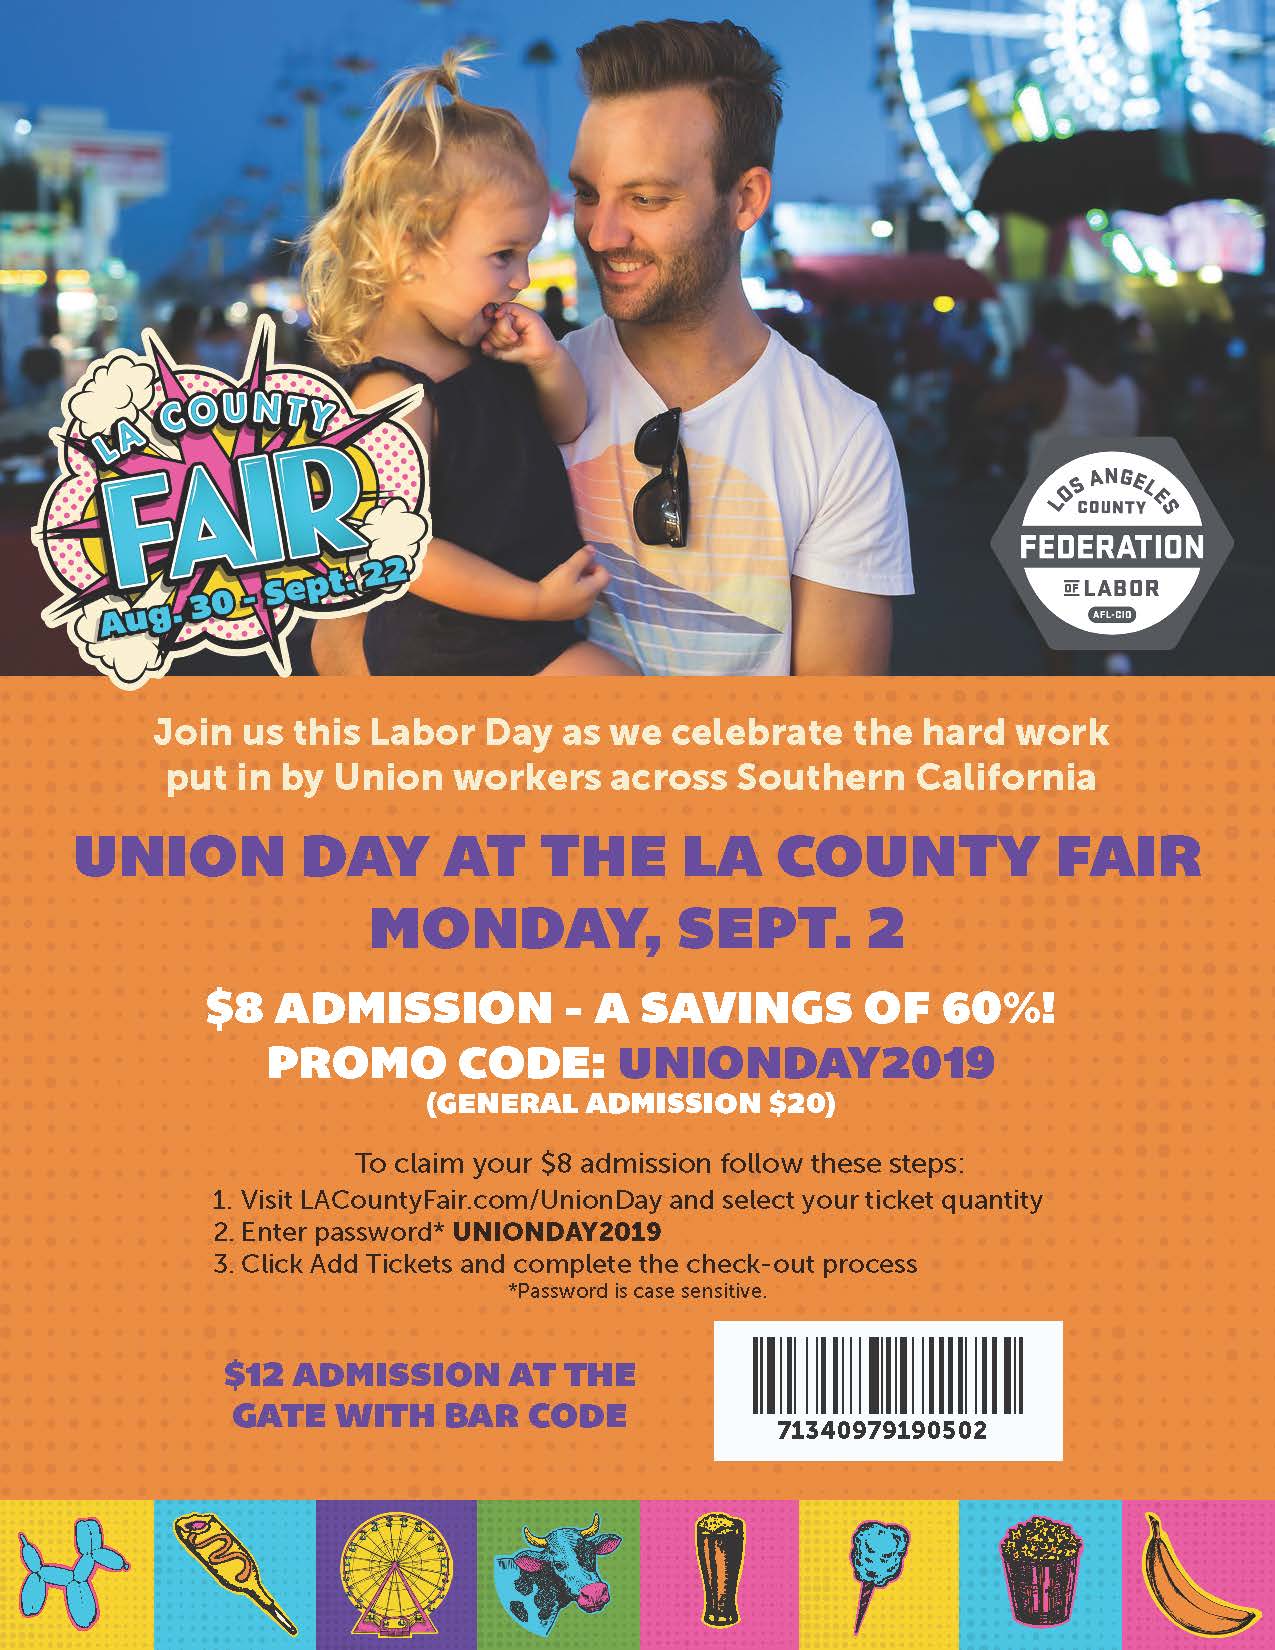 8 Admission to LA County Fair on 'Union Day' Sept. 2 SEIU Local 721